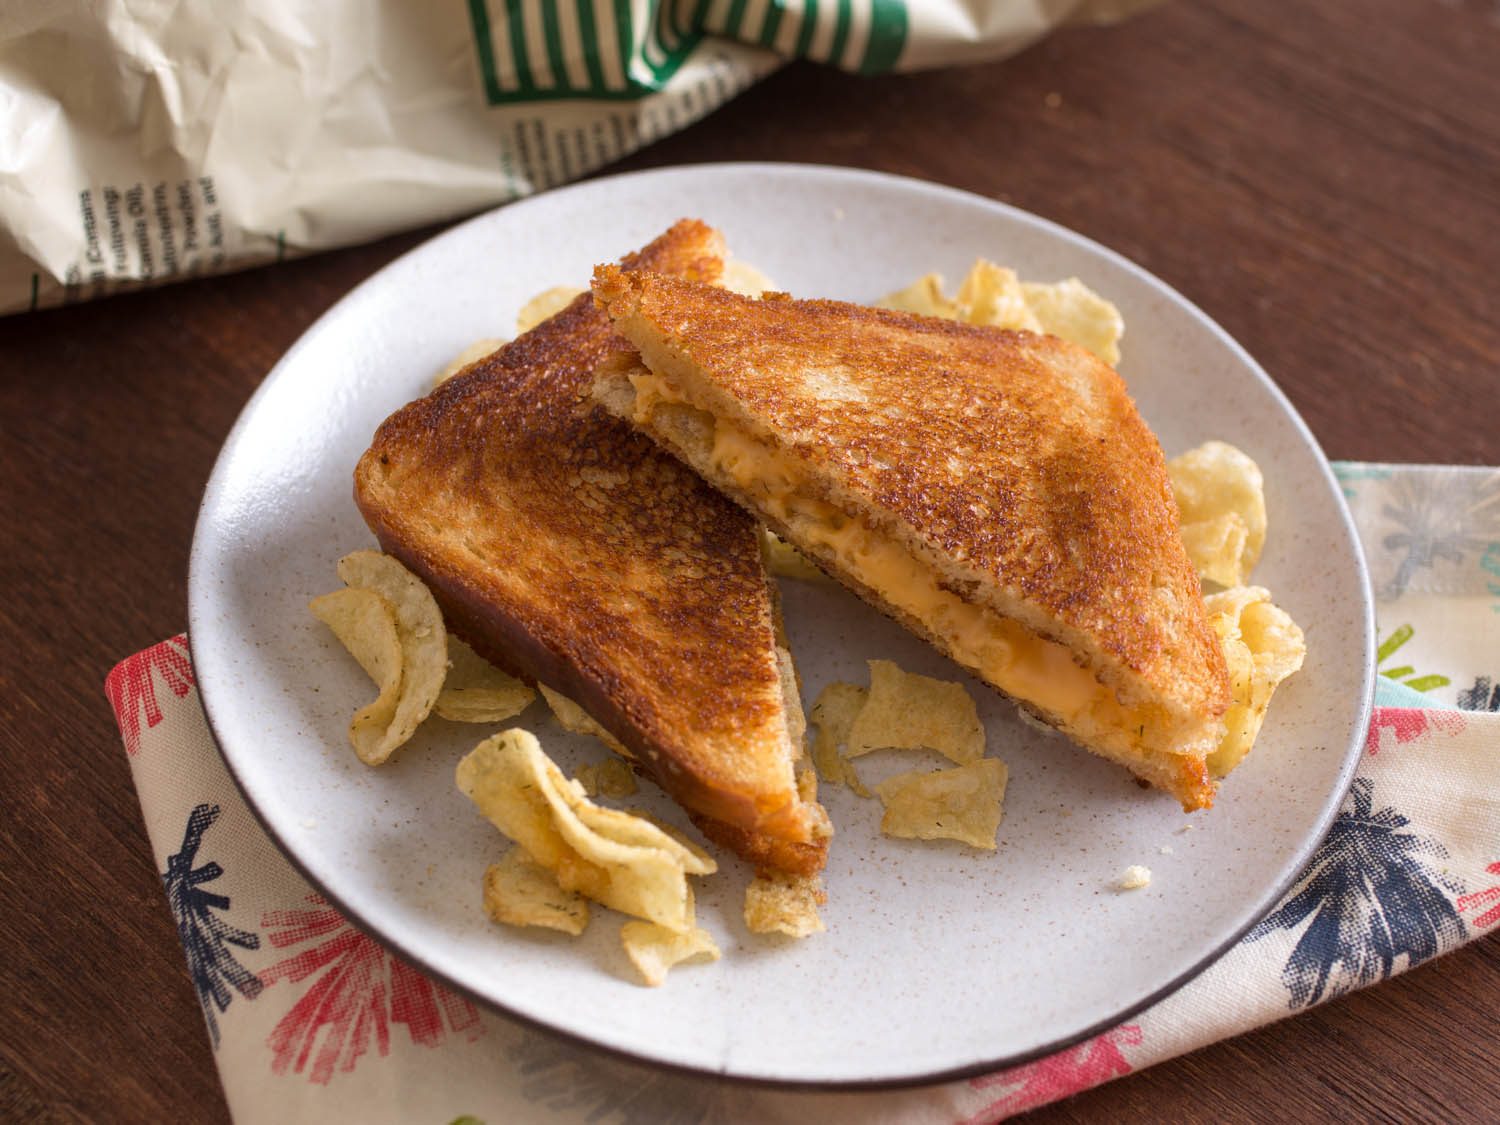 20150219-grilled-cheese-potato-chip-sandwich-vicky-wasik-1-1500x1125.jpg